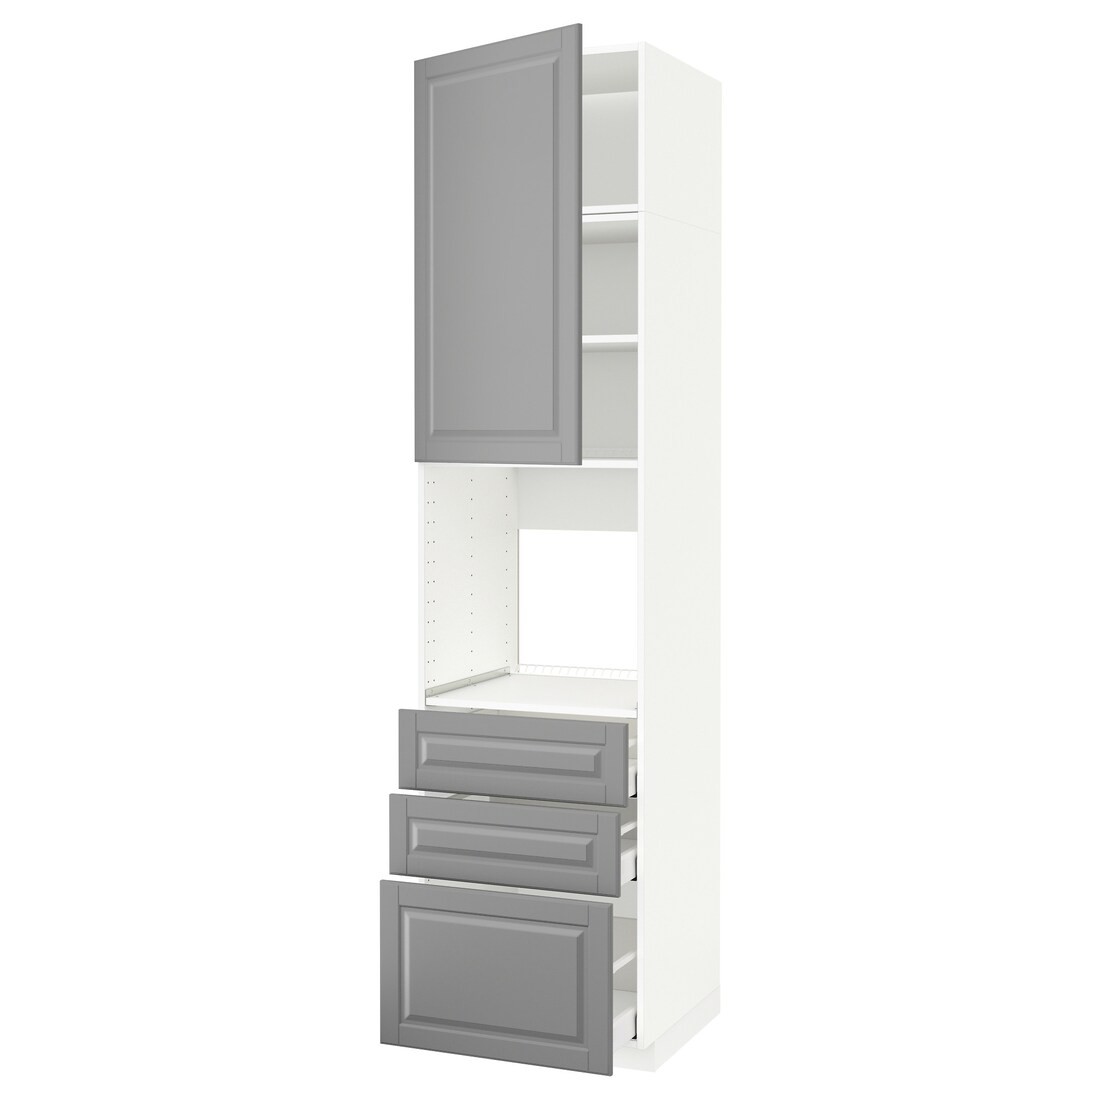 IKEA METOD МЕТОД / MAXIMERA МАКСИМЕРА Высокий шкаф для духовки, белый / Bodbyn серый, 60x60x240 см 29459936 | 294.599.36